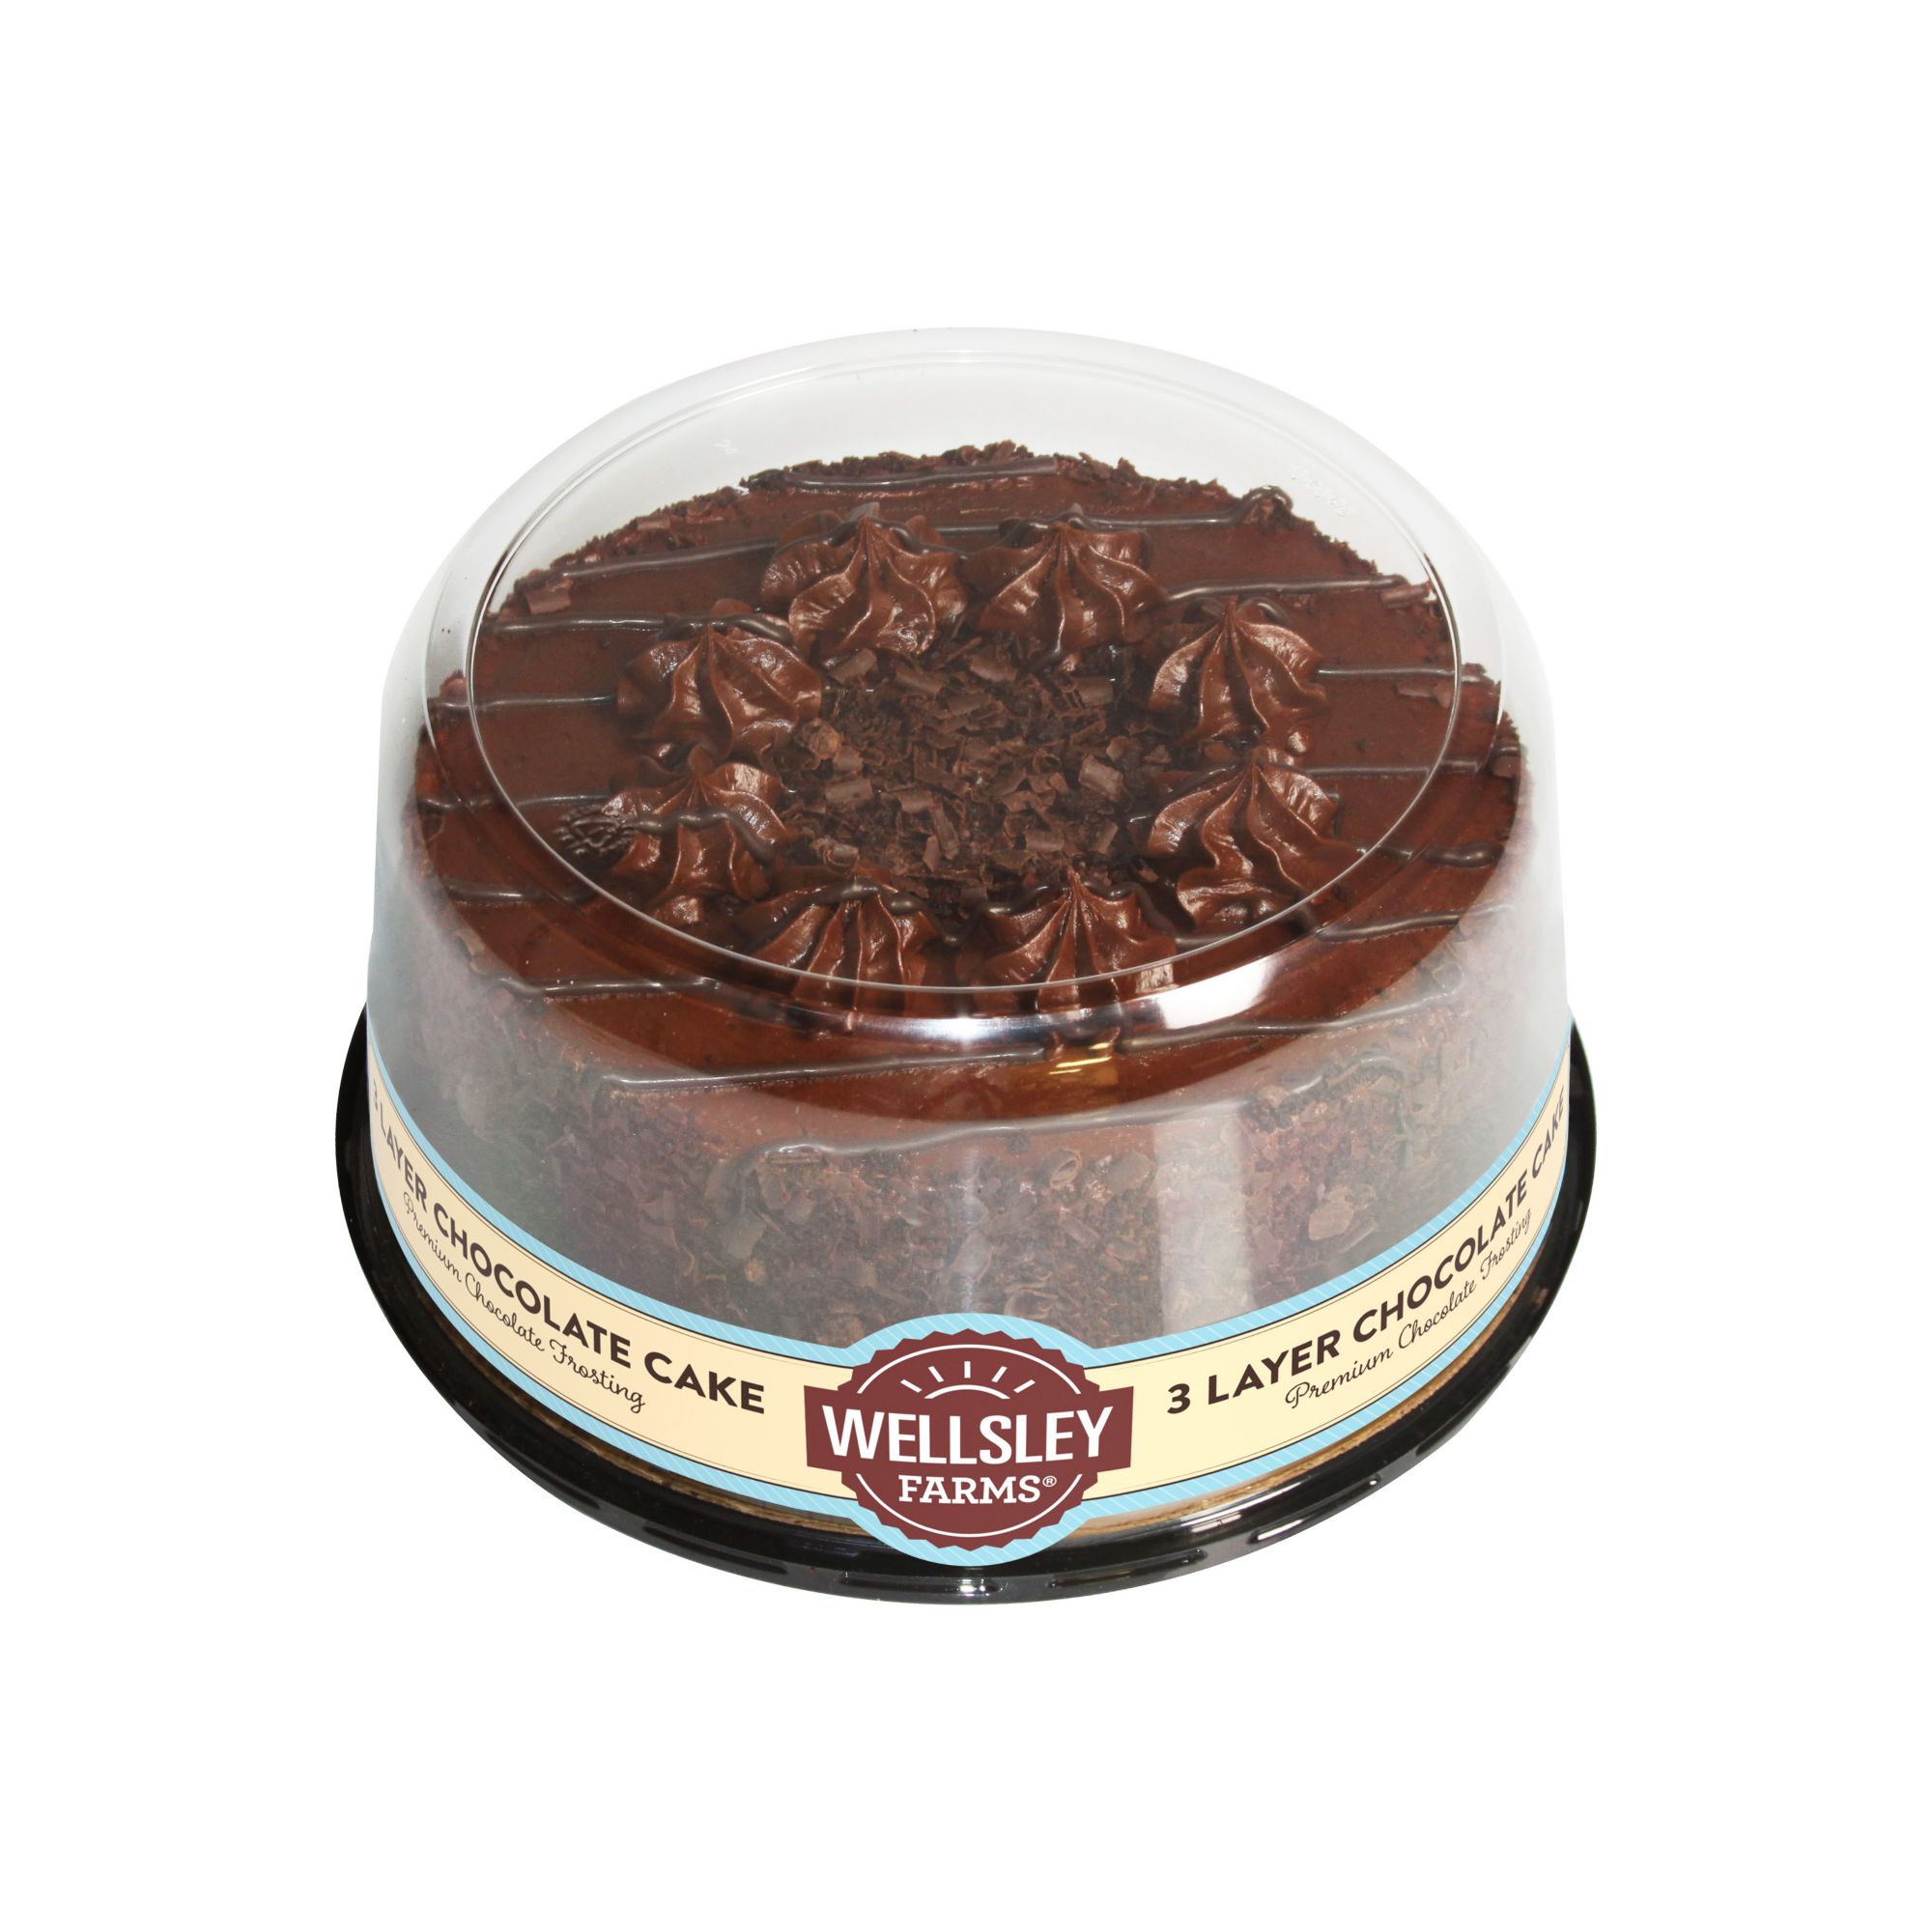 Wellsley Farms Three Layer Chocolate Cake, 49 oz.